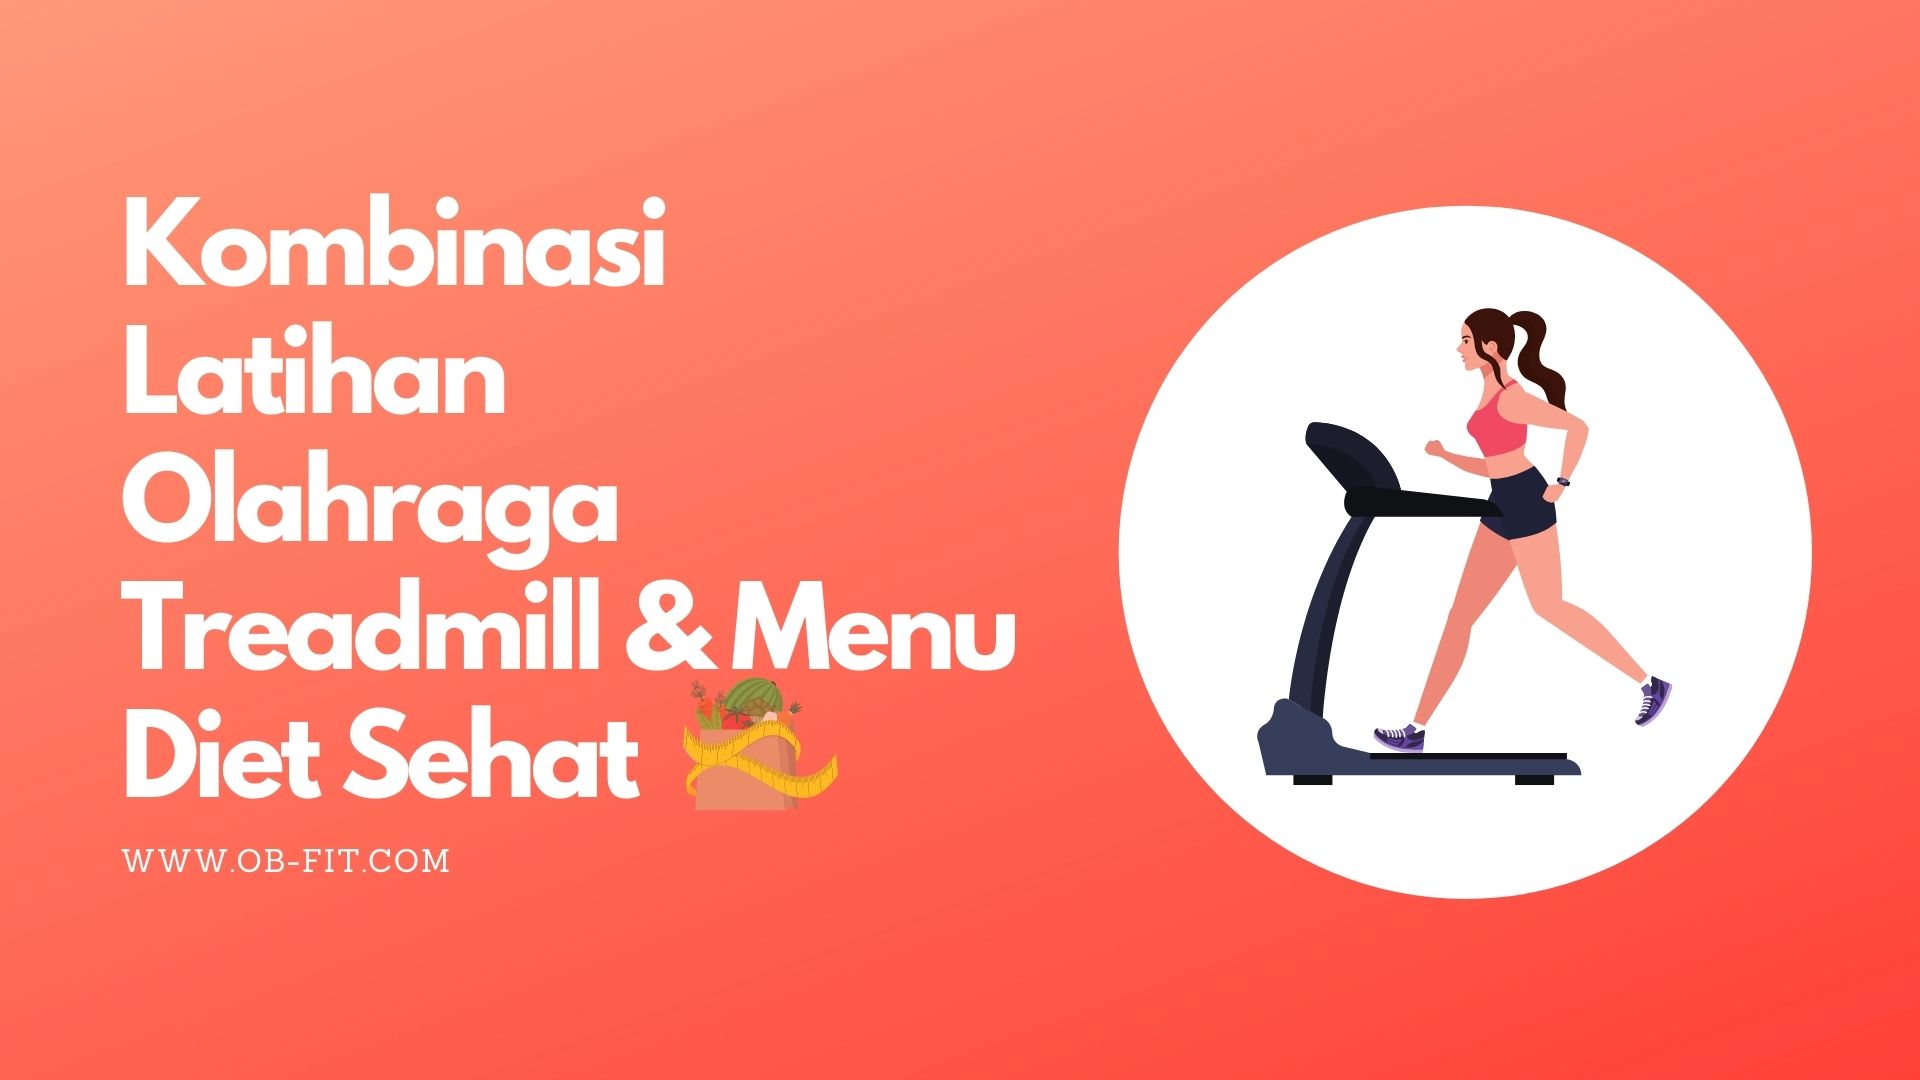 Kombinasi Latihan Olahraga Treadmill & Menu Diet Sehat